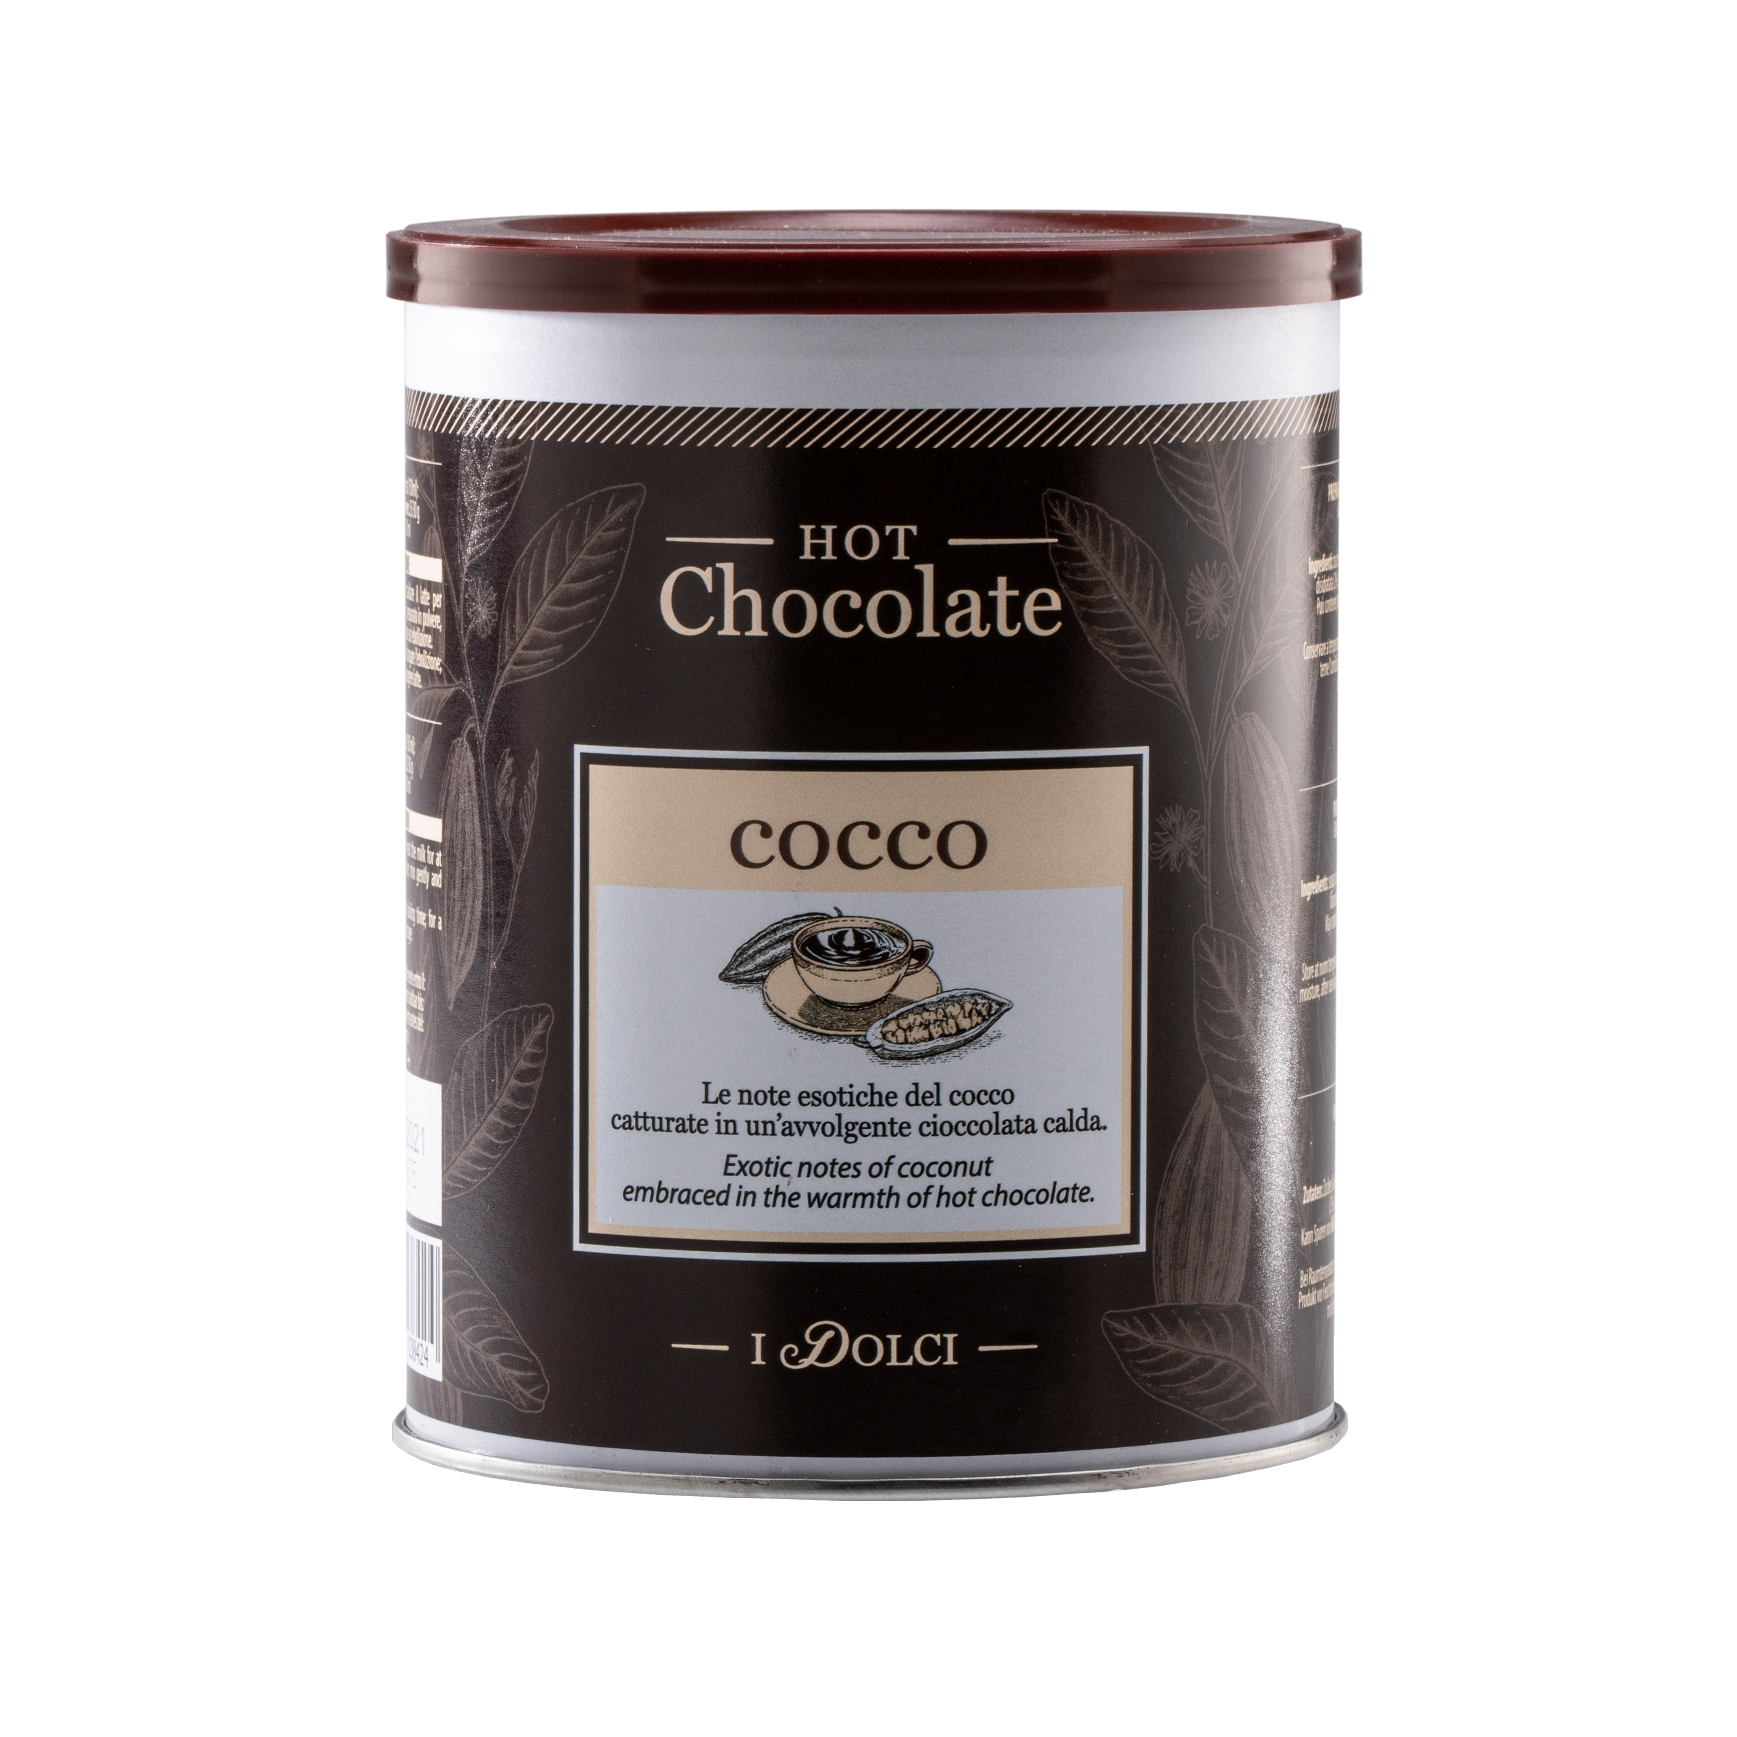 Горячий шоколад Diemme Caffe Coconut Chocolate 500 г горячий шоколад elza hot chocolate 325 г